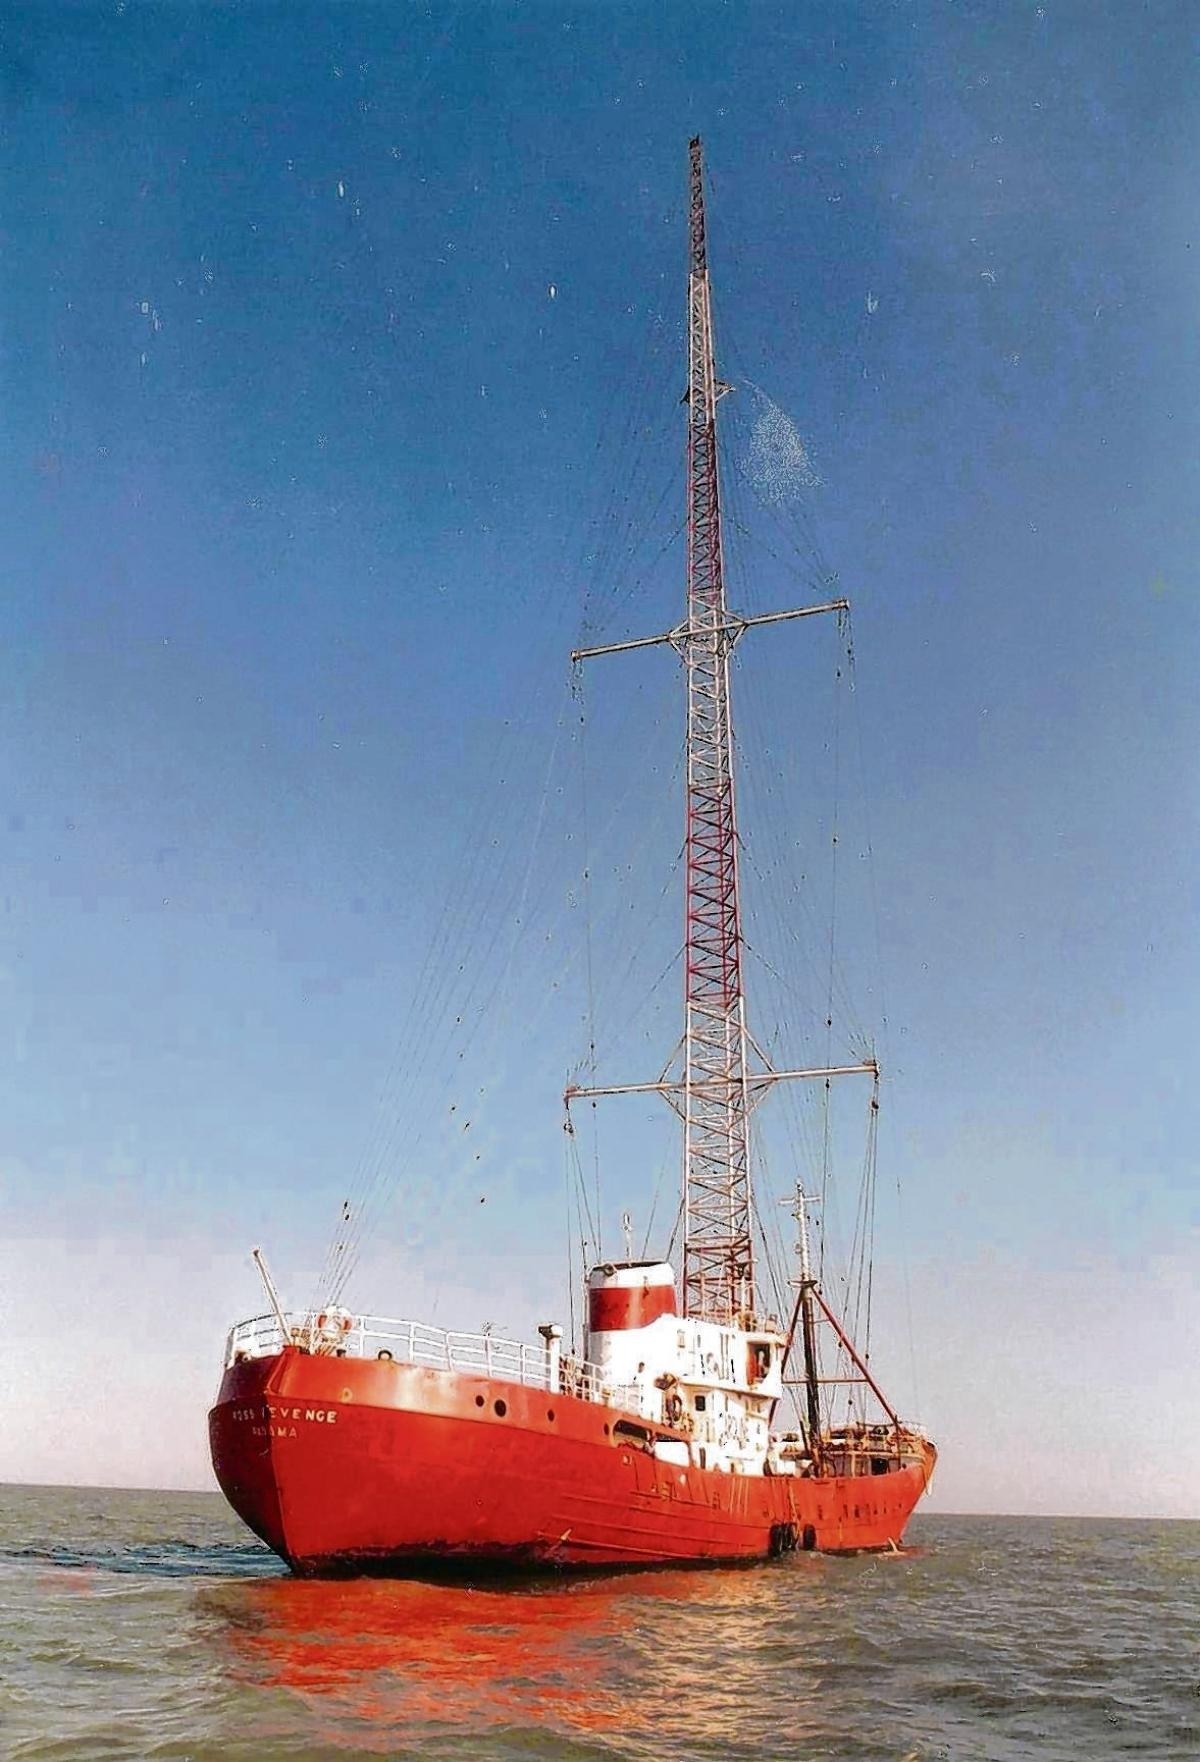 The Radio Caroline ship